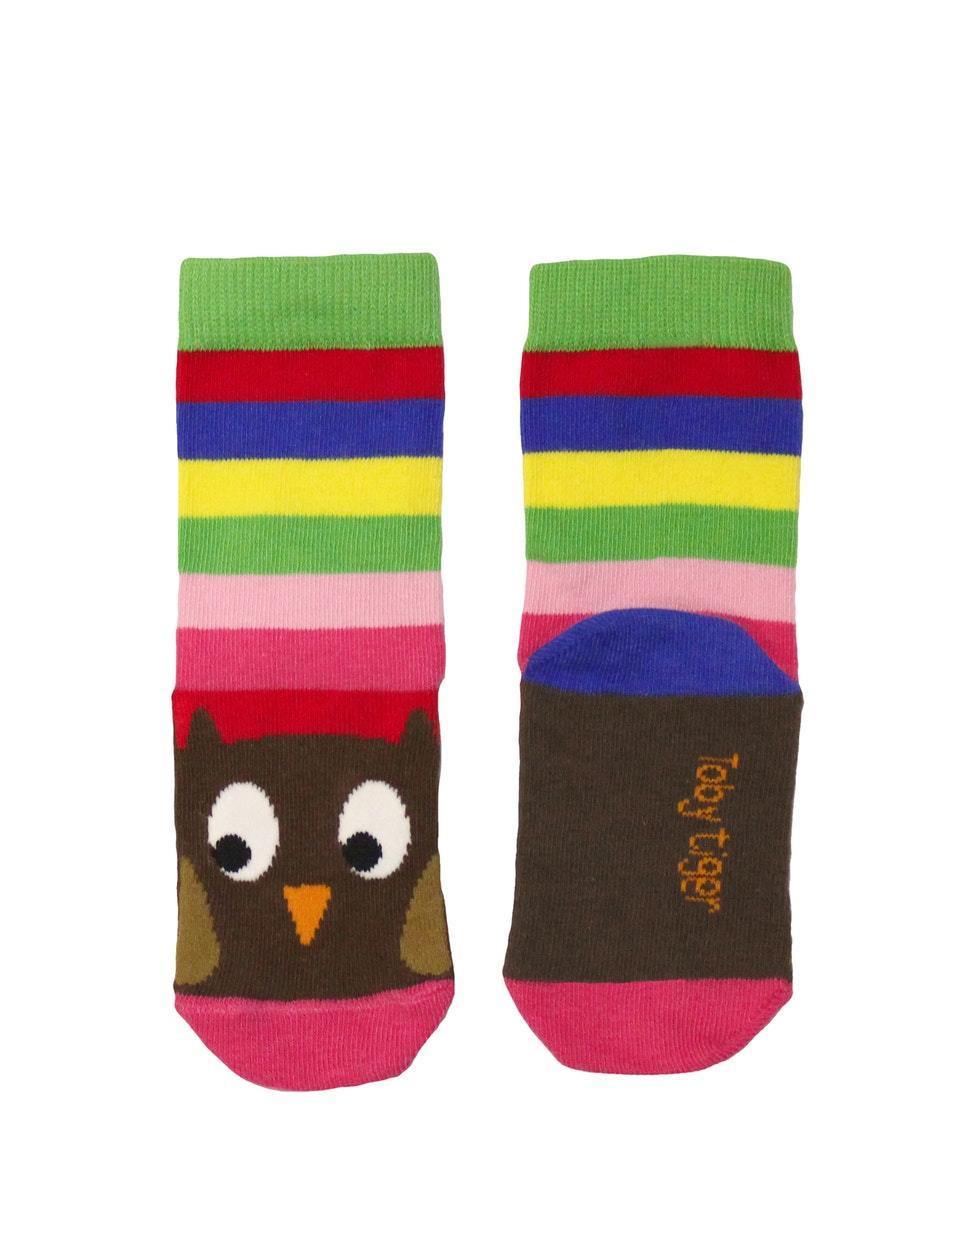 Toby Tiger Multicoloured Owl Socks - Mrs Best Paper Co.